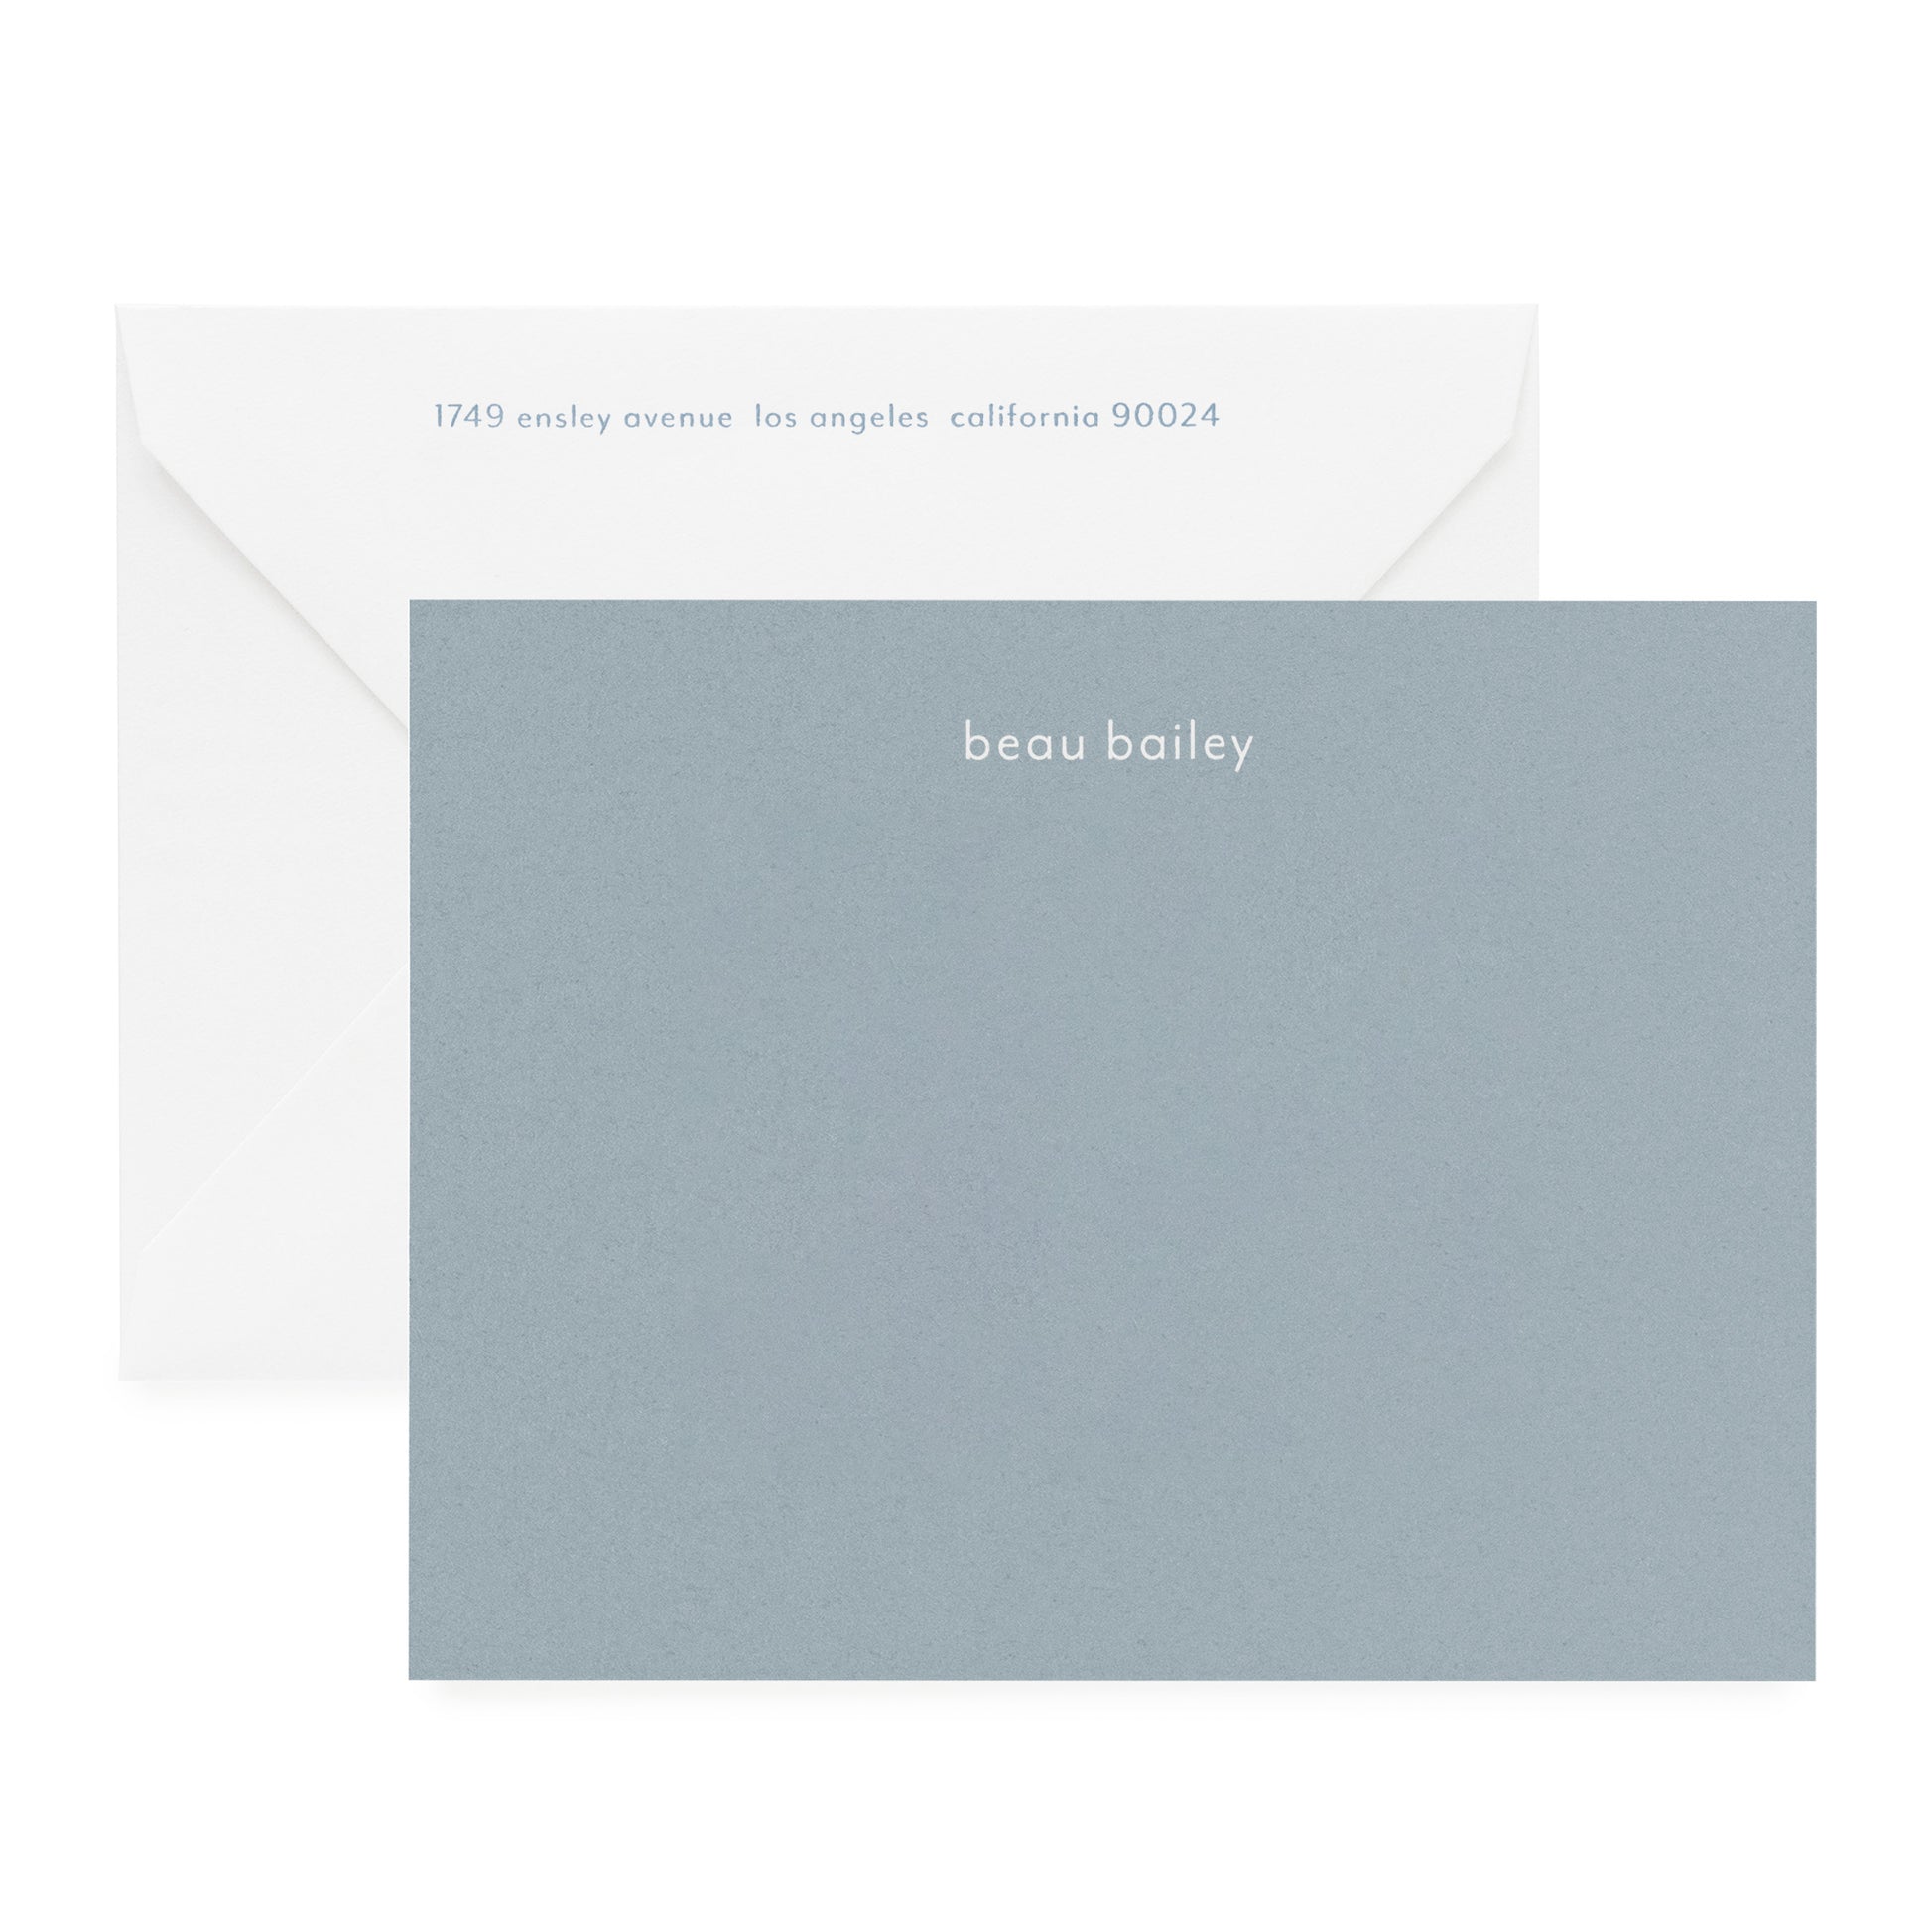 Slate blue stationery with white envelope